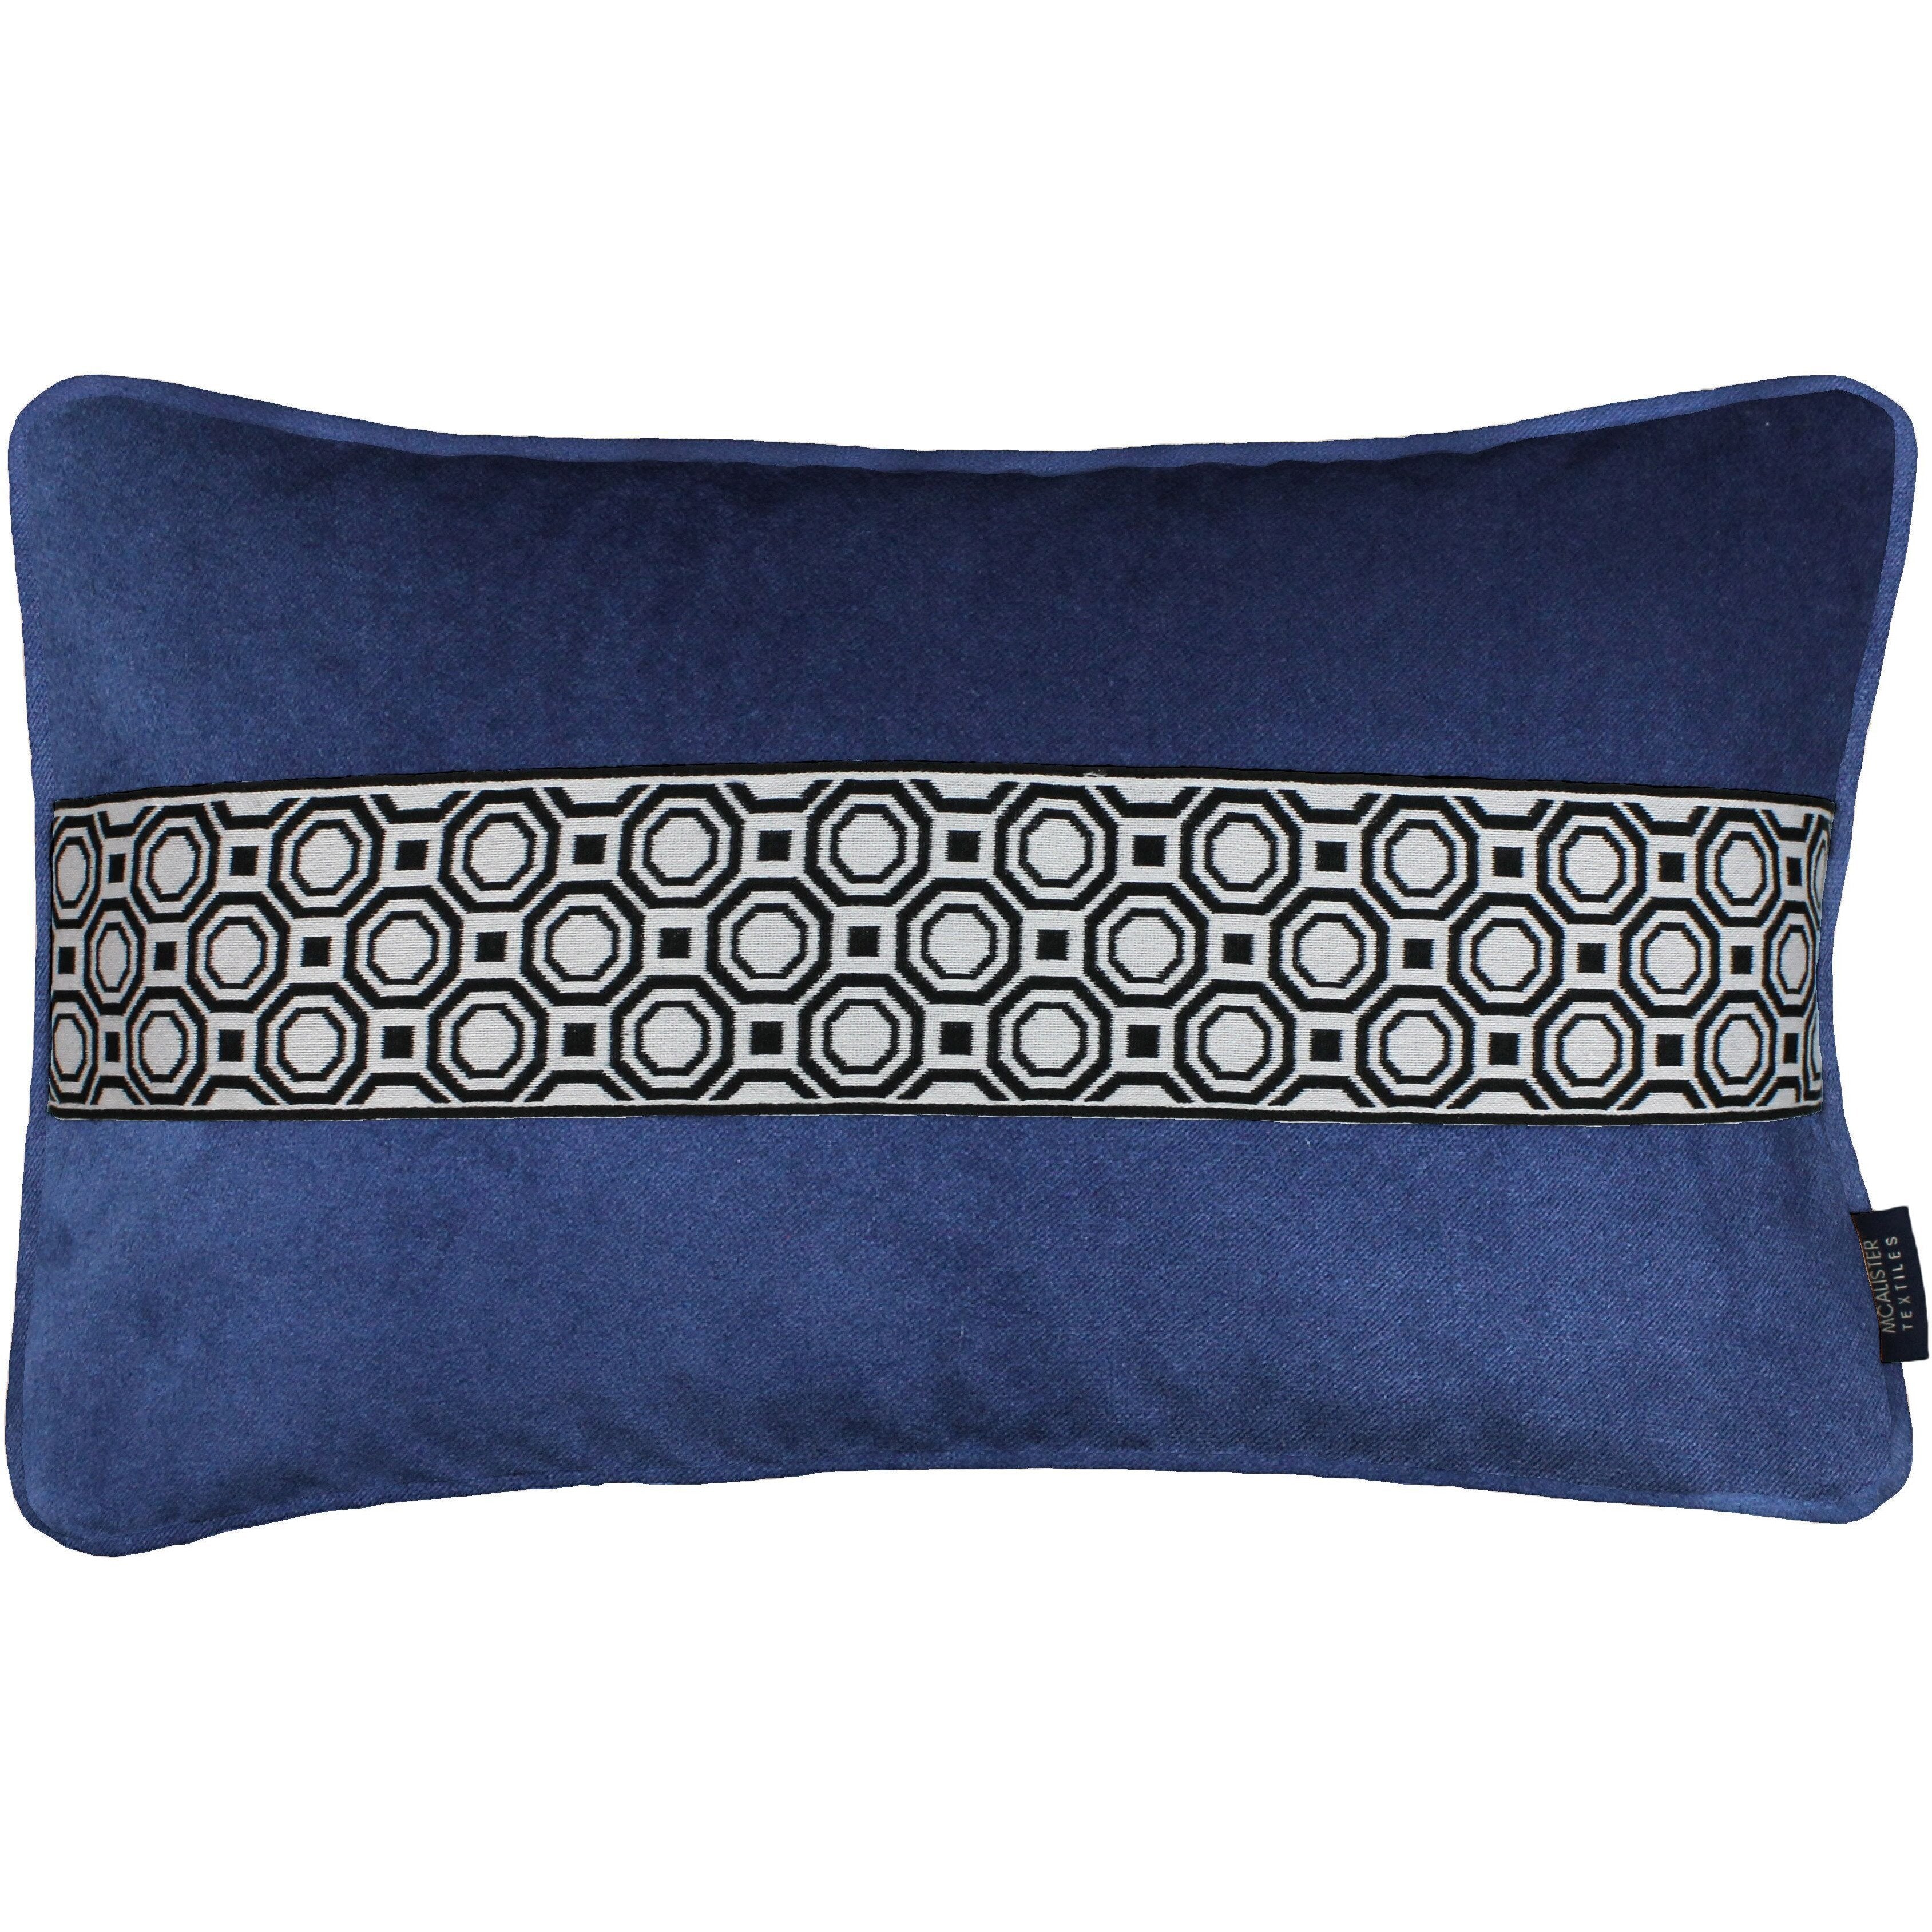 McAlister Textiles Cancun Striped Navy Blue Velvet Pillow Pillow Cover Only 50cm x 30cm 